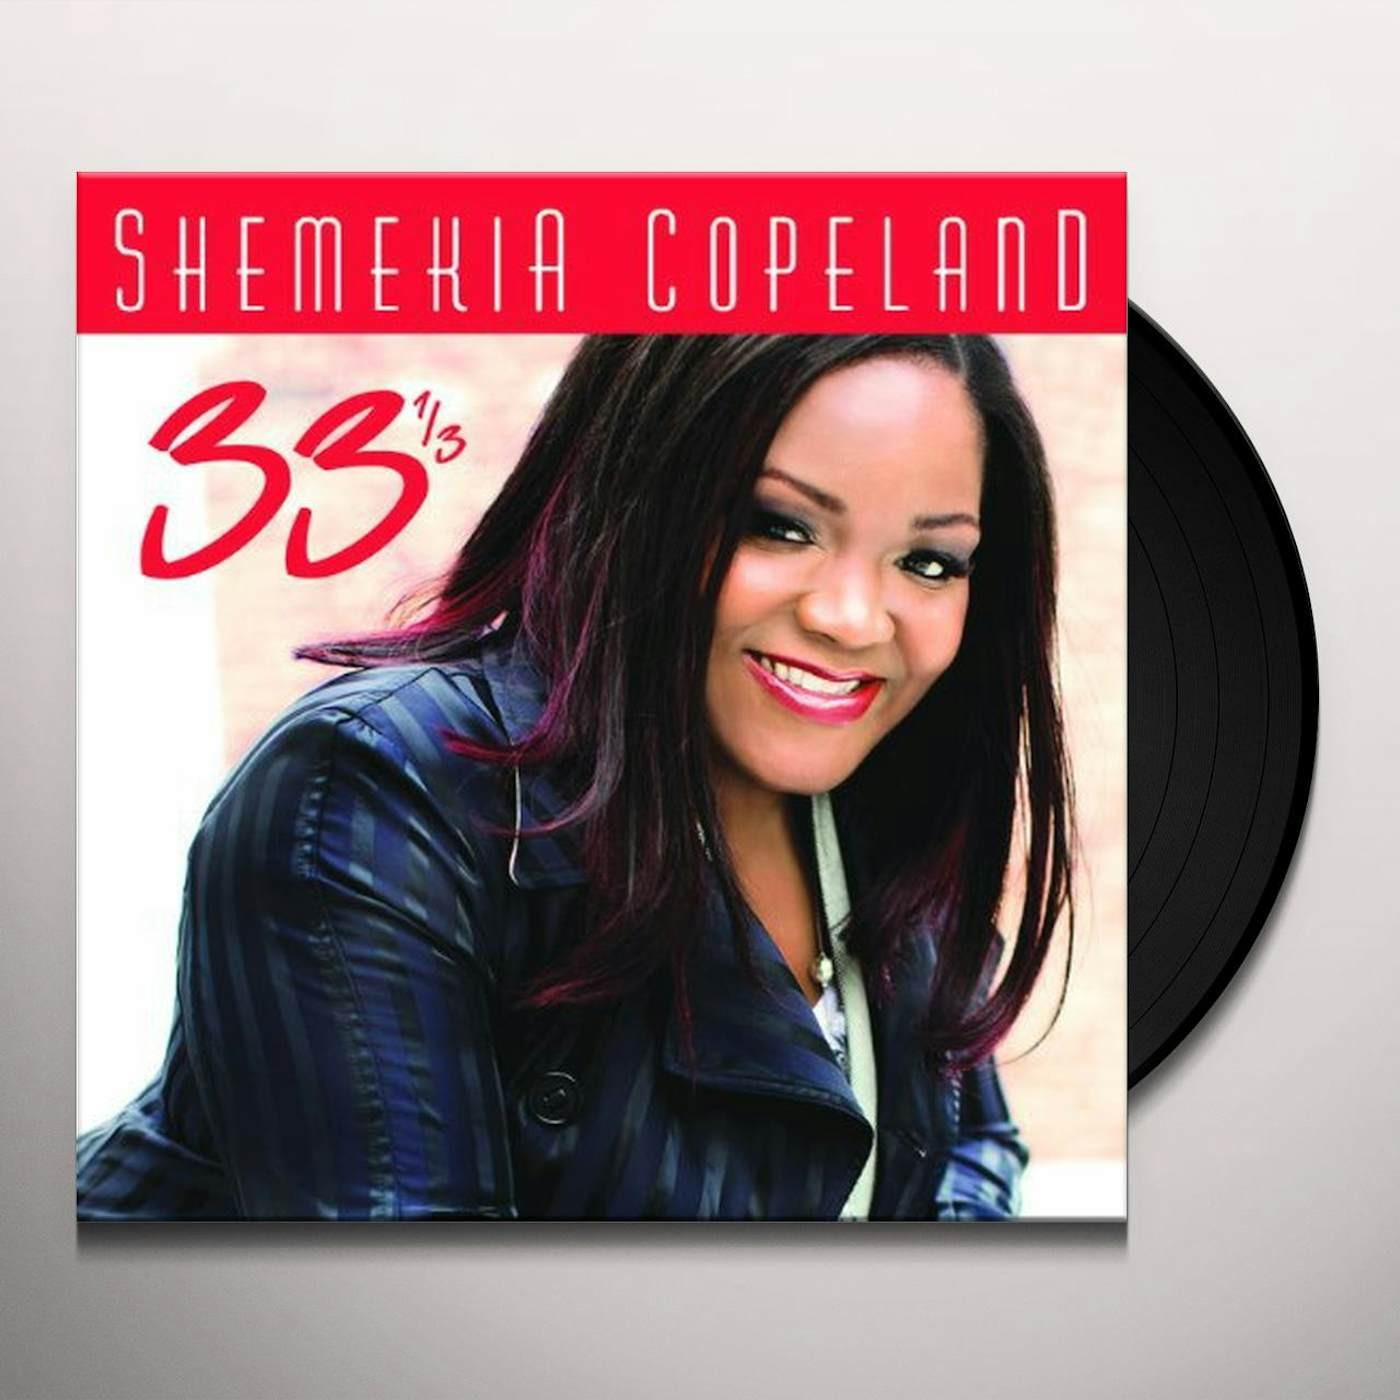 Shemekia Copeland 33 1/3 Vinyl Record